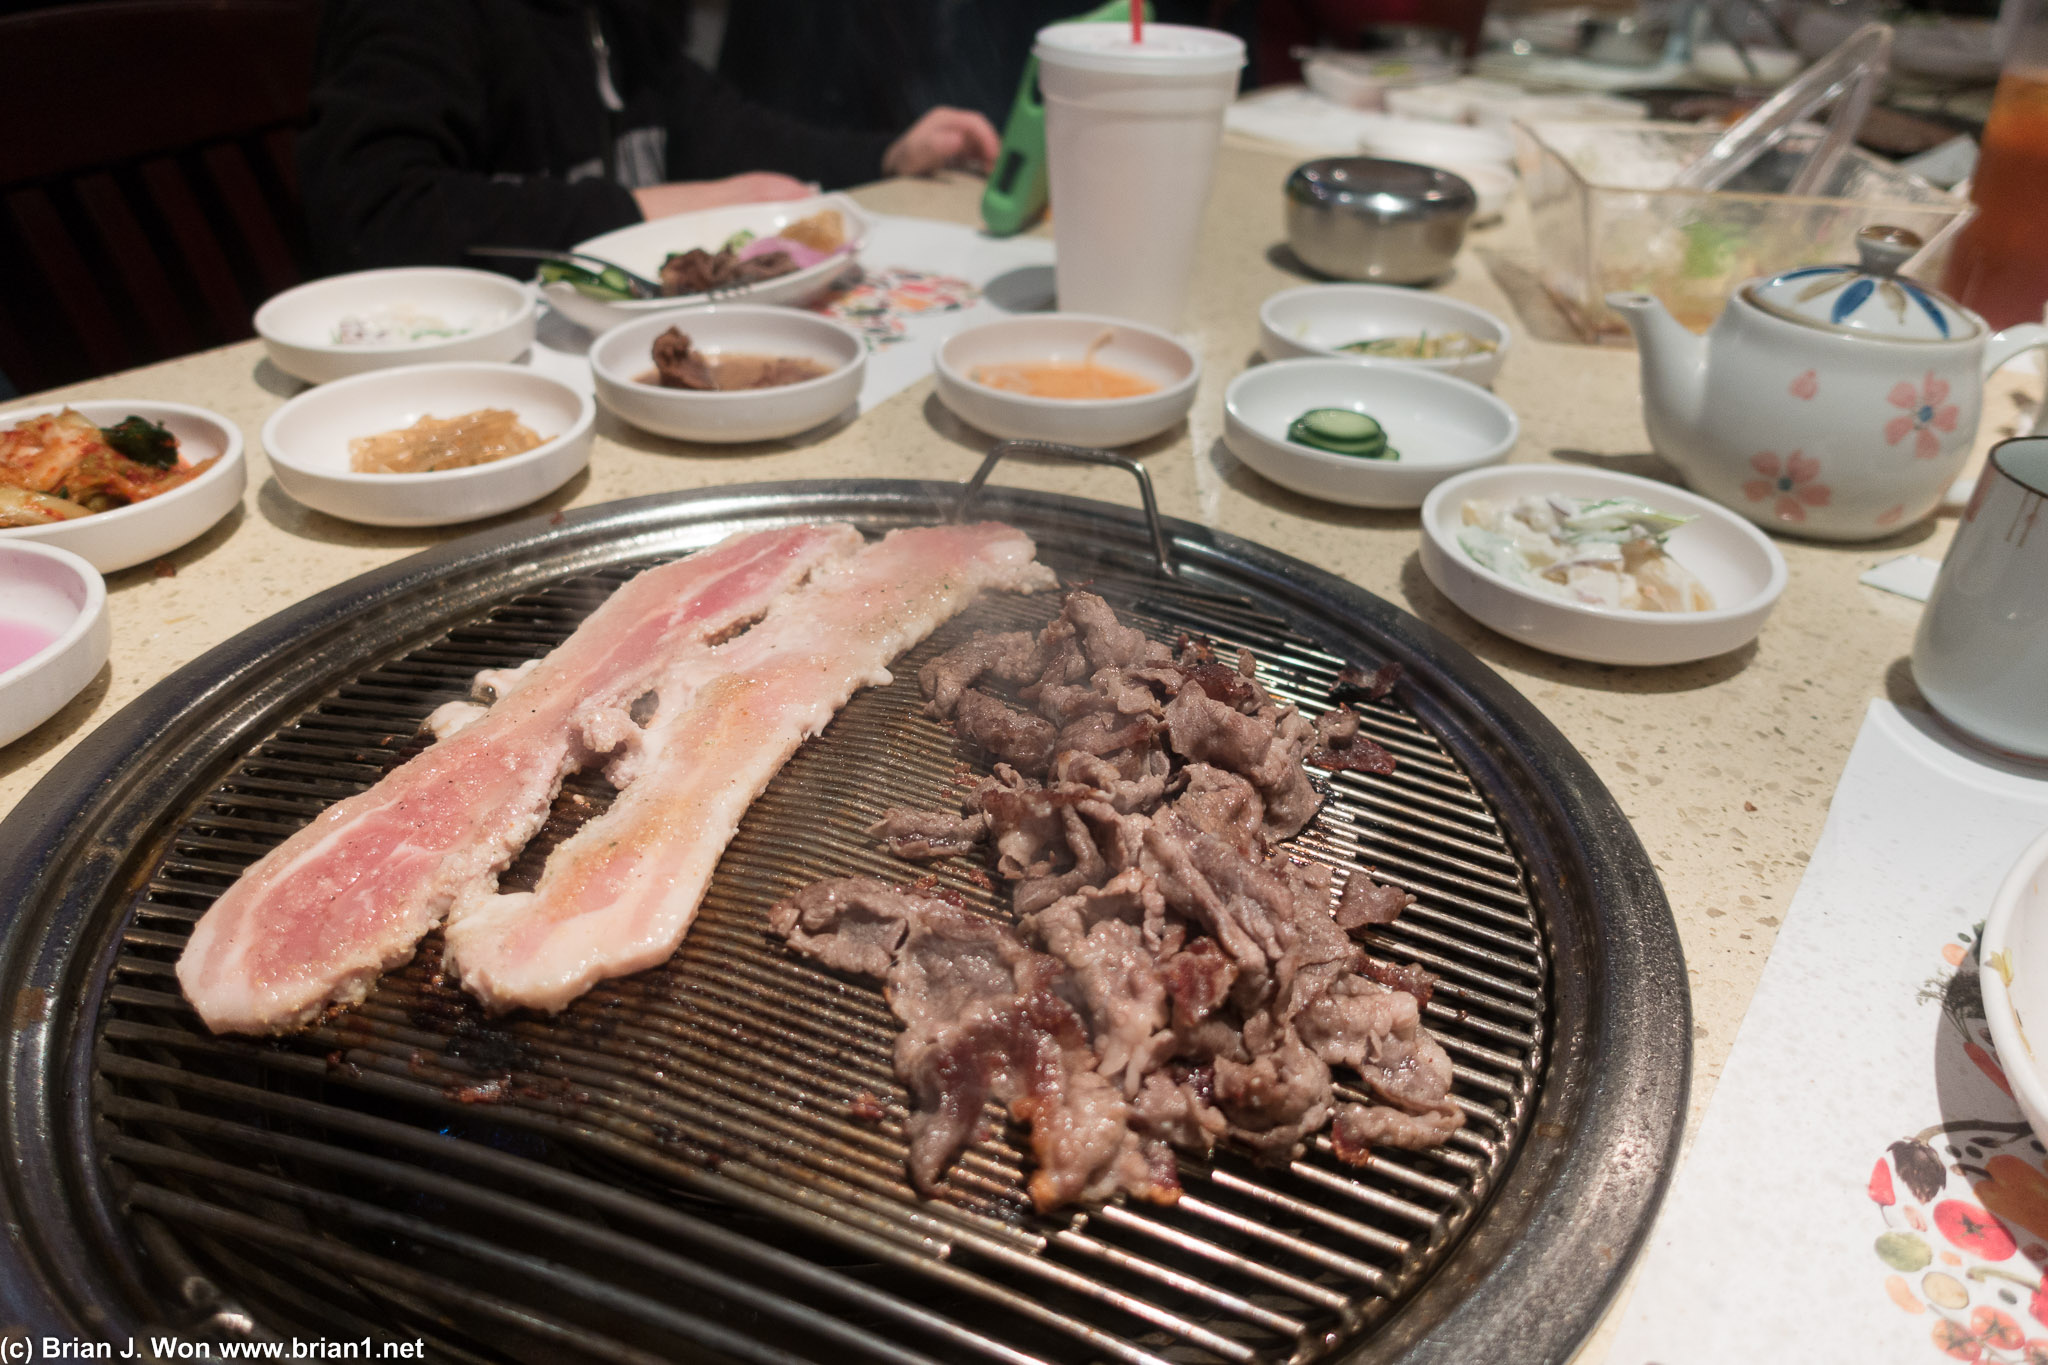 Pork belly and beef brisket.